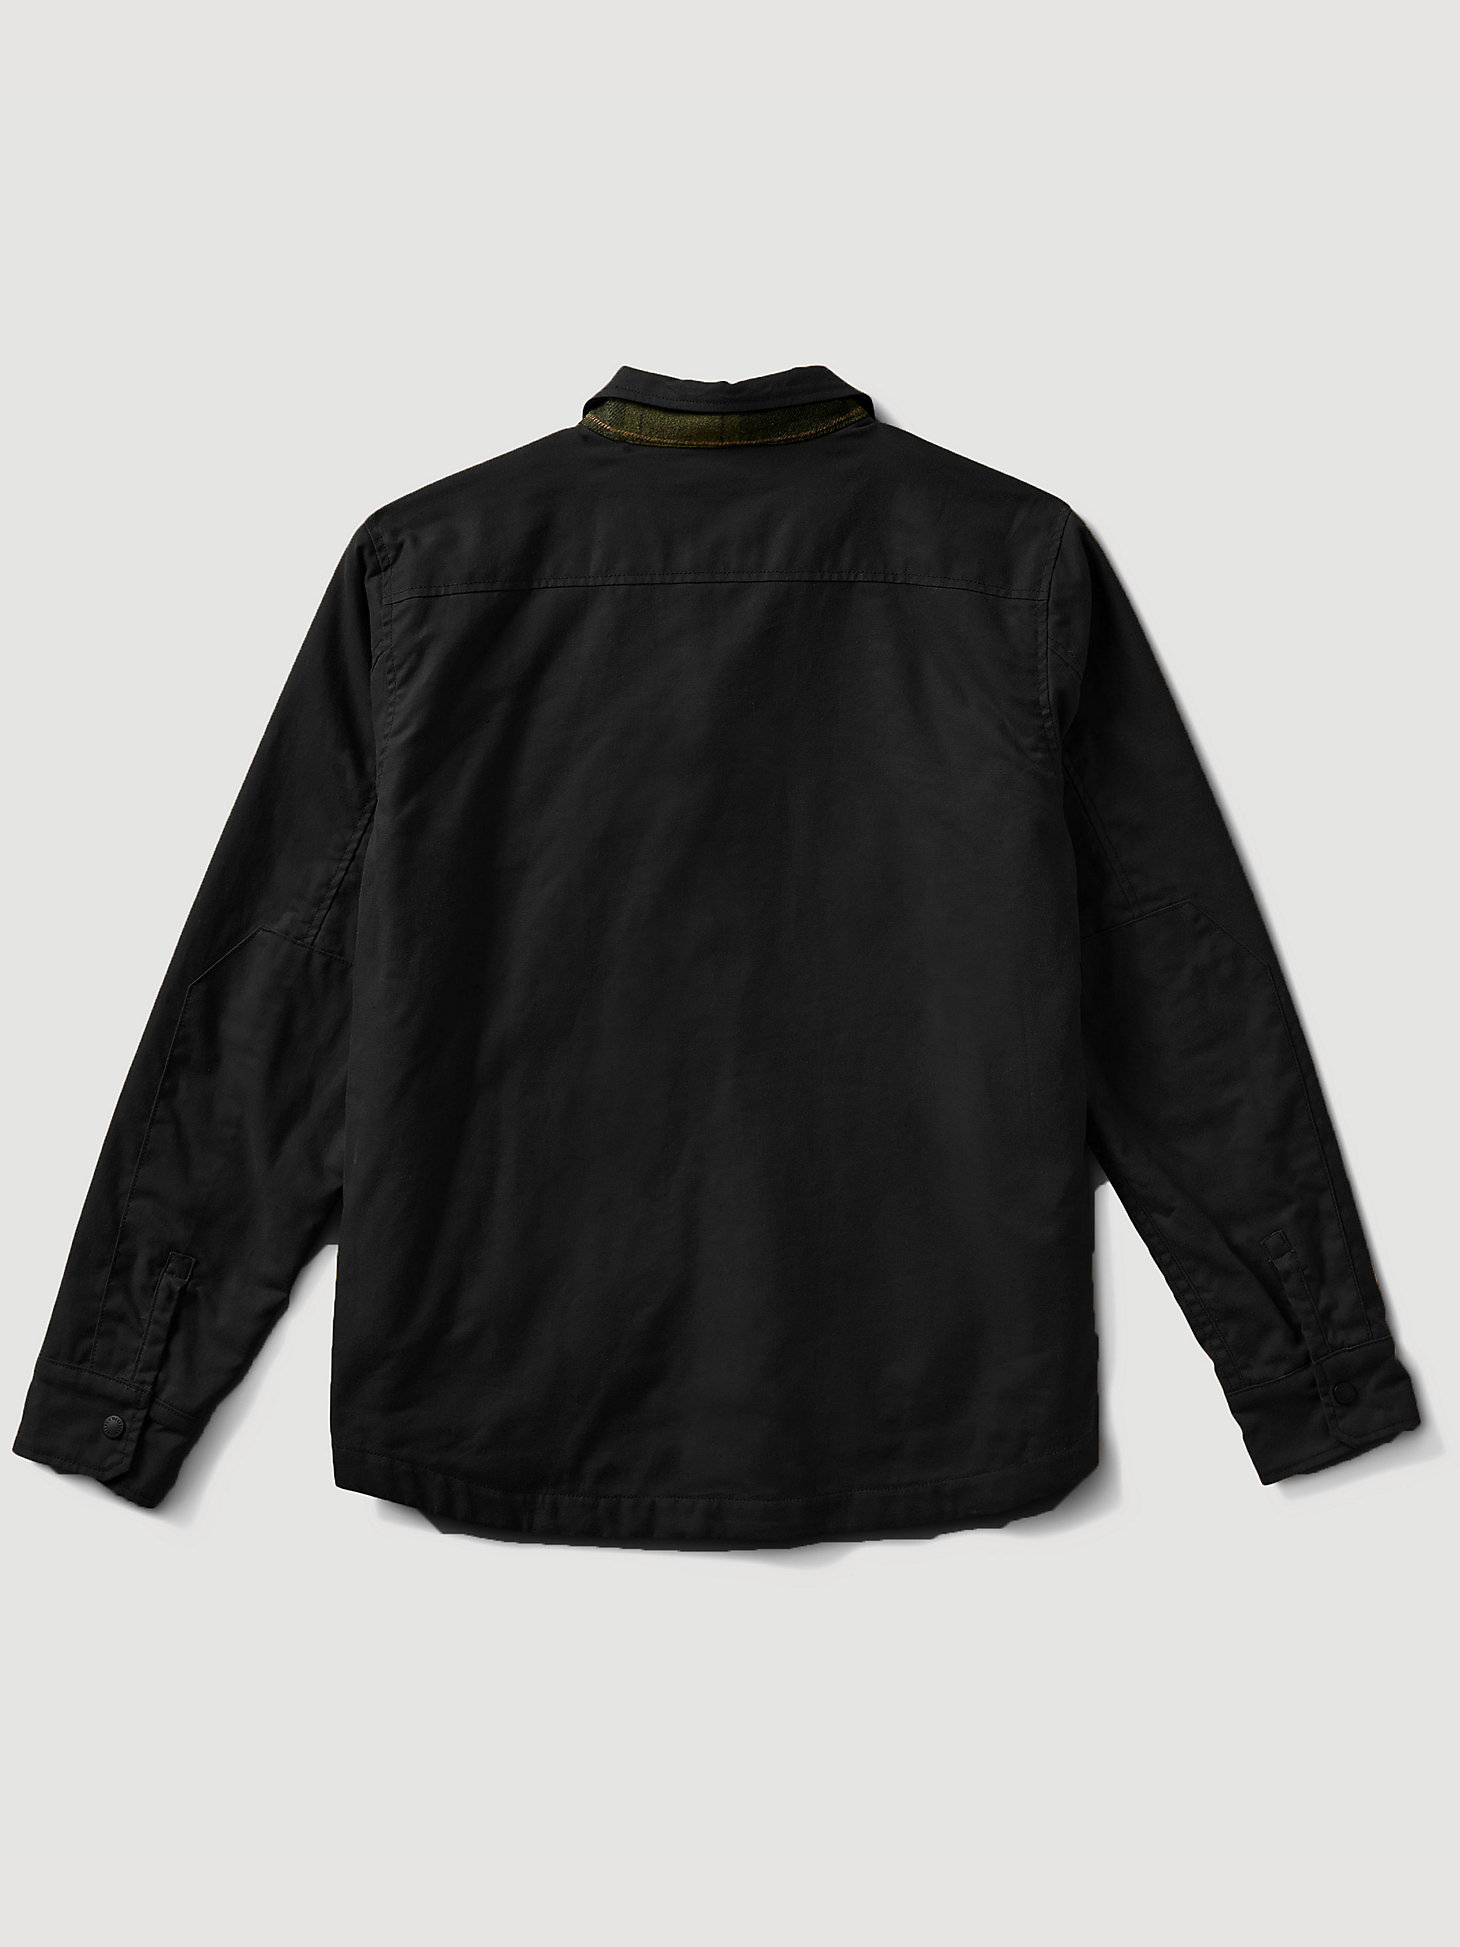 Roark Maverick Chore Lined Jacket:Black:XL alternative view 2